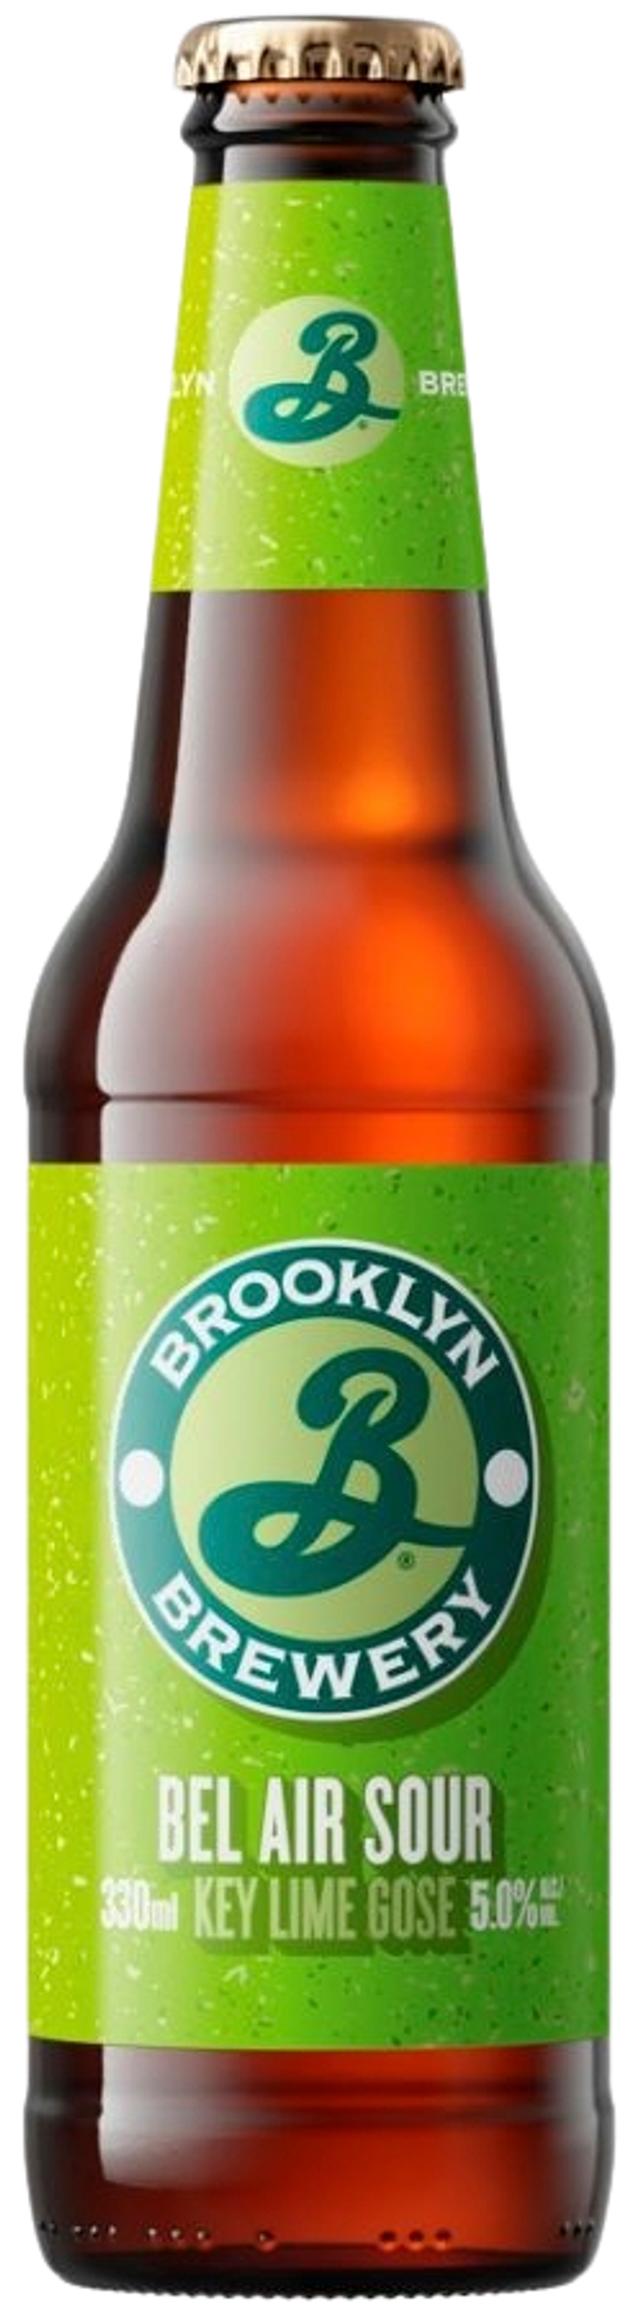 Brooklyn Key Lime Gose olut 5 % lasipullo 0,33 L